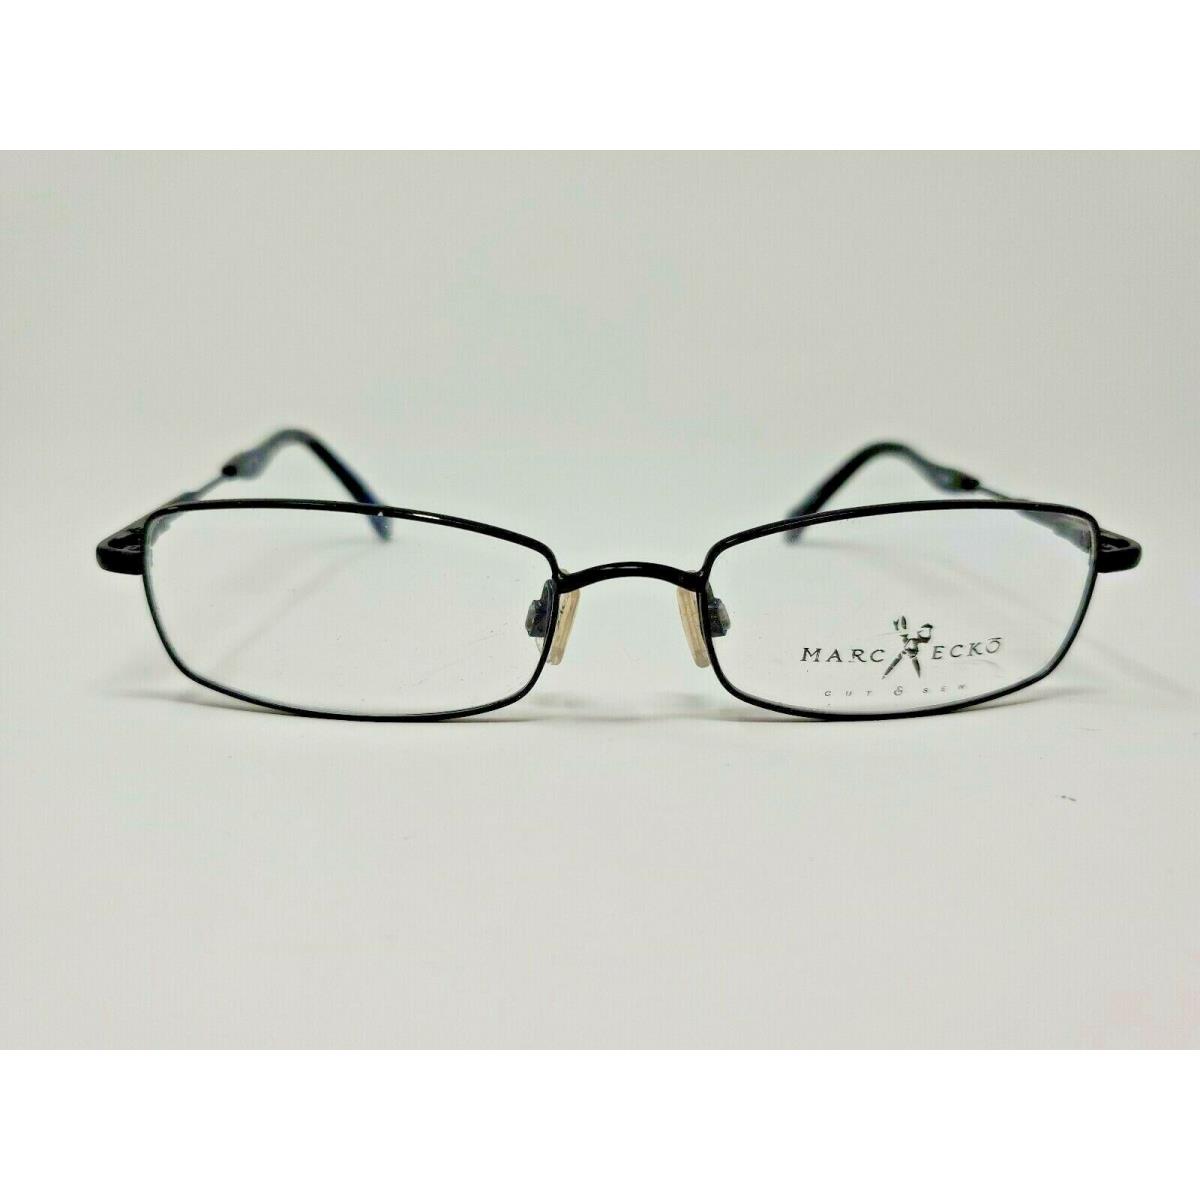 Marc Ecko Eyeglasses Frame Hindsight 53-18-145 Black/blue Marble SA01